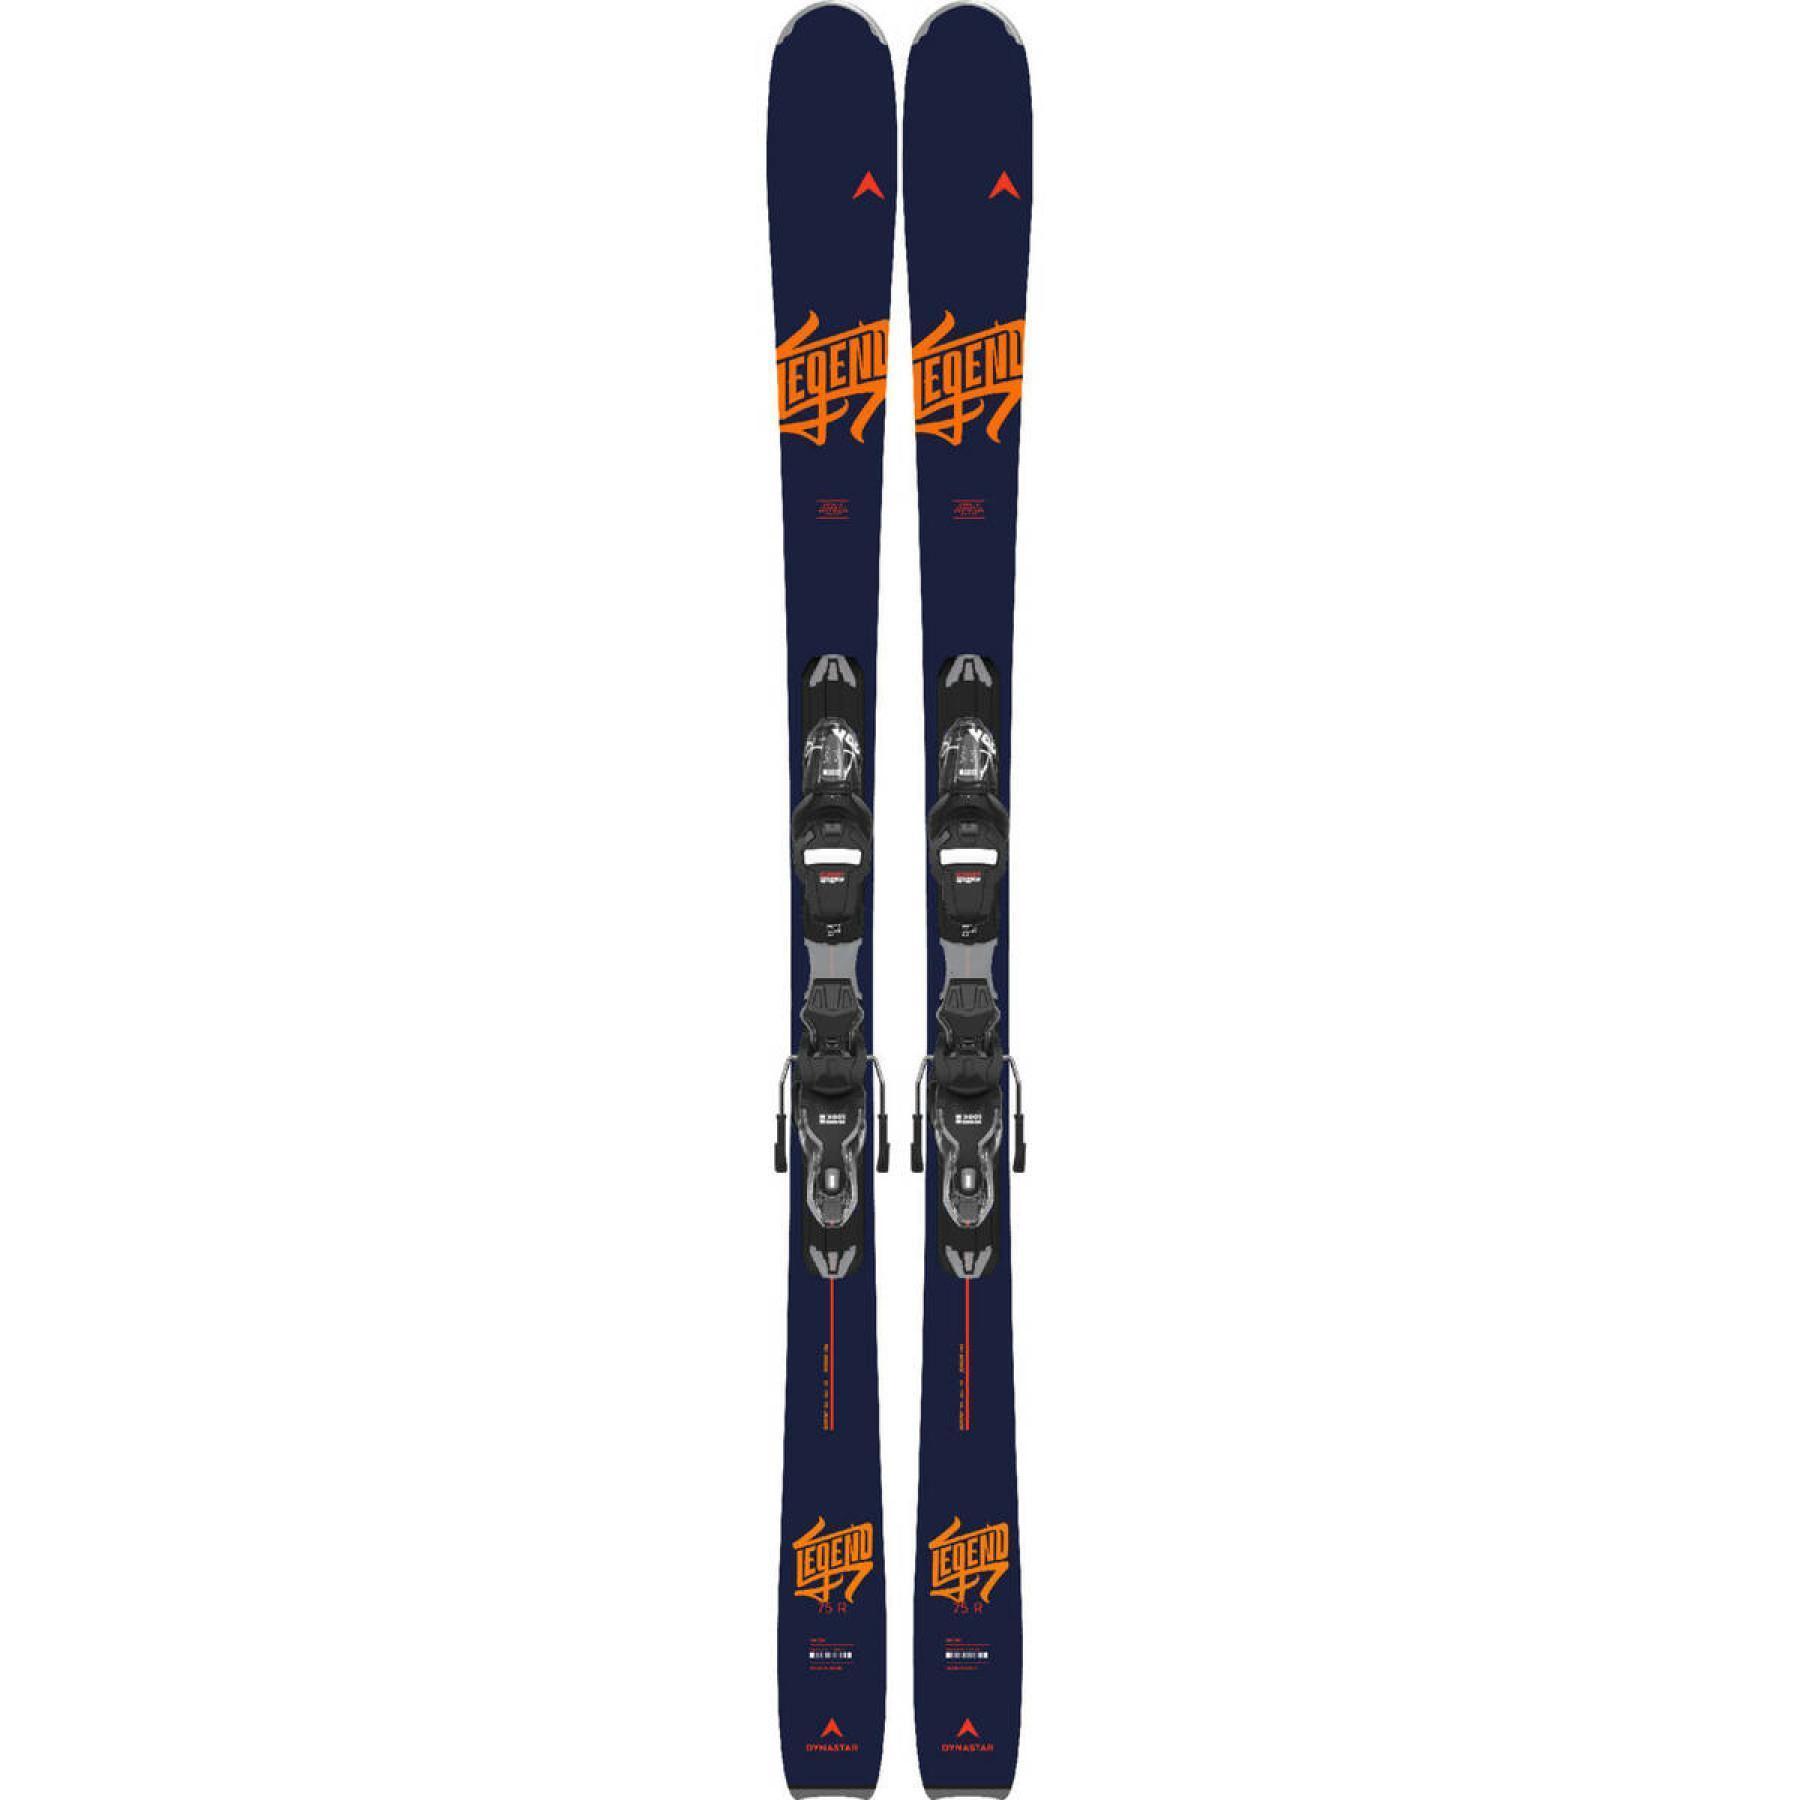 Ski binding Dynastar legend 75 rl (ress)